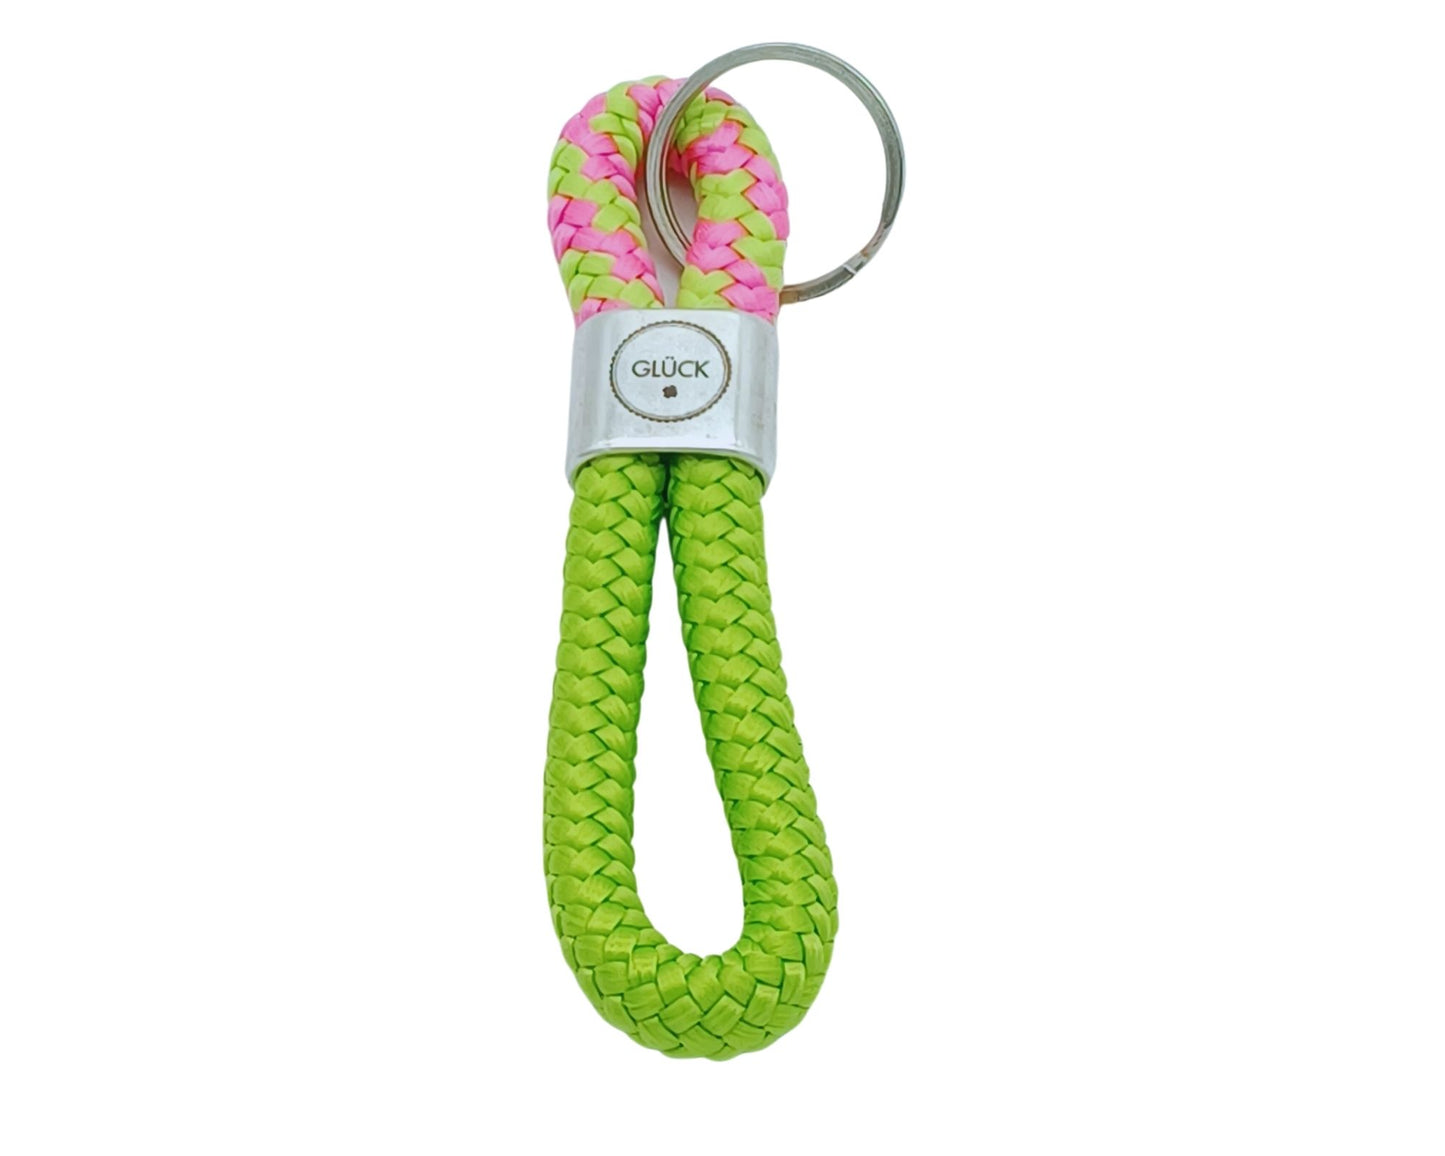 Segelseil Schlüsselanhänger, grün/ grün pink, Glück